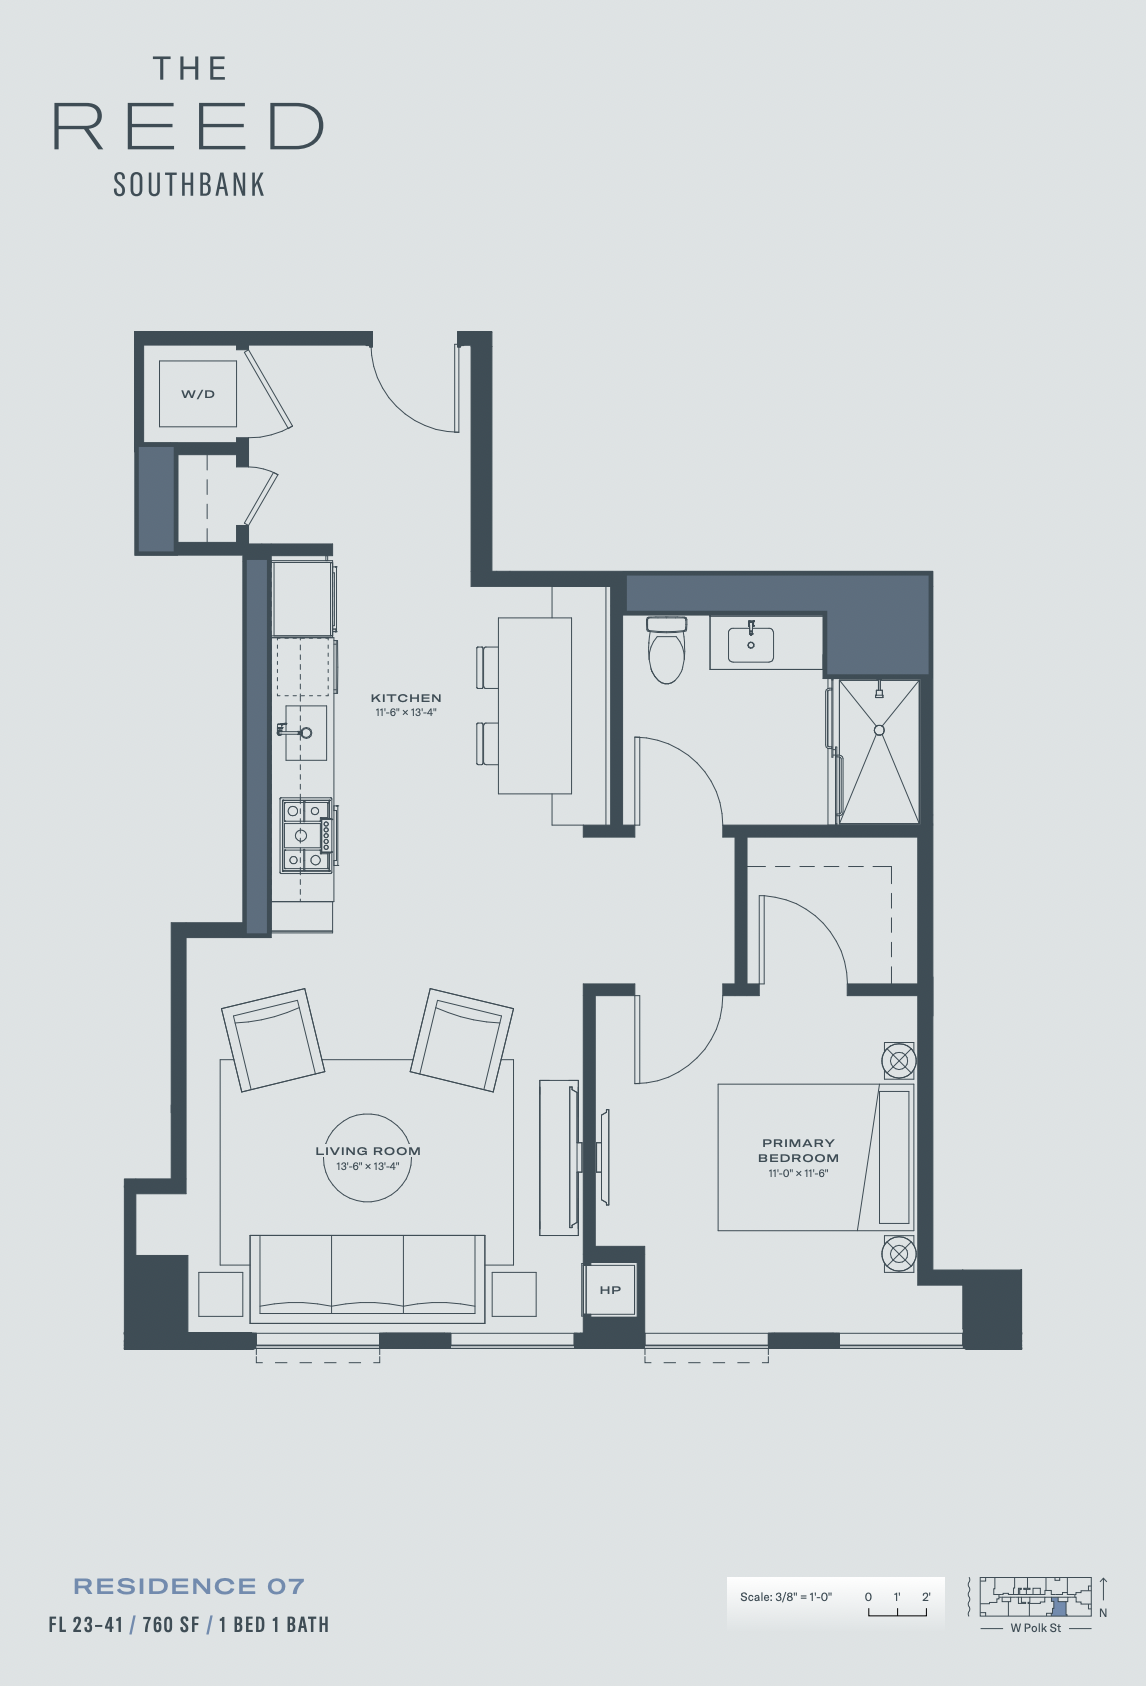 Sample one-bedroom condominium floor plan